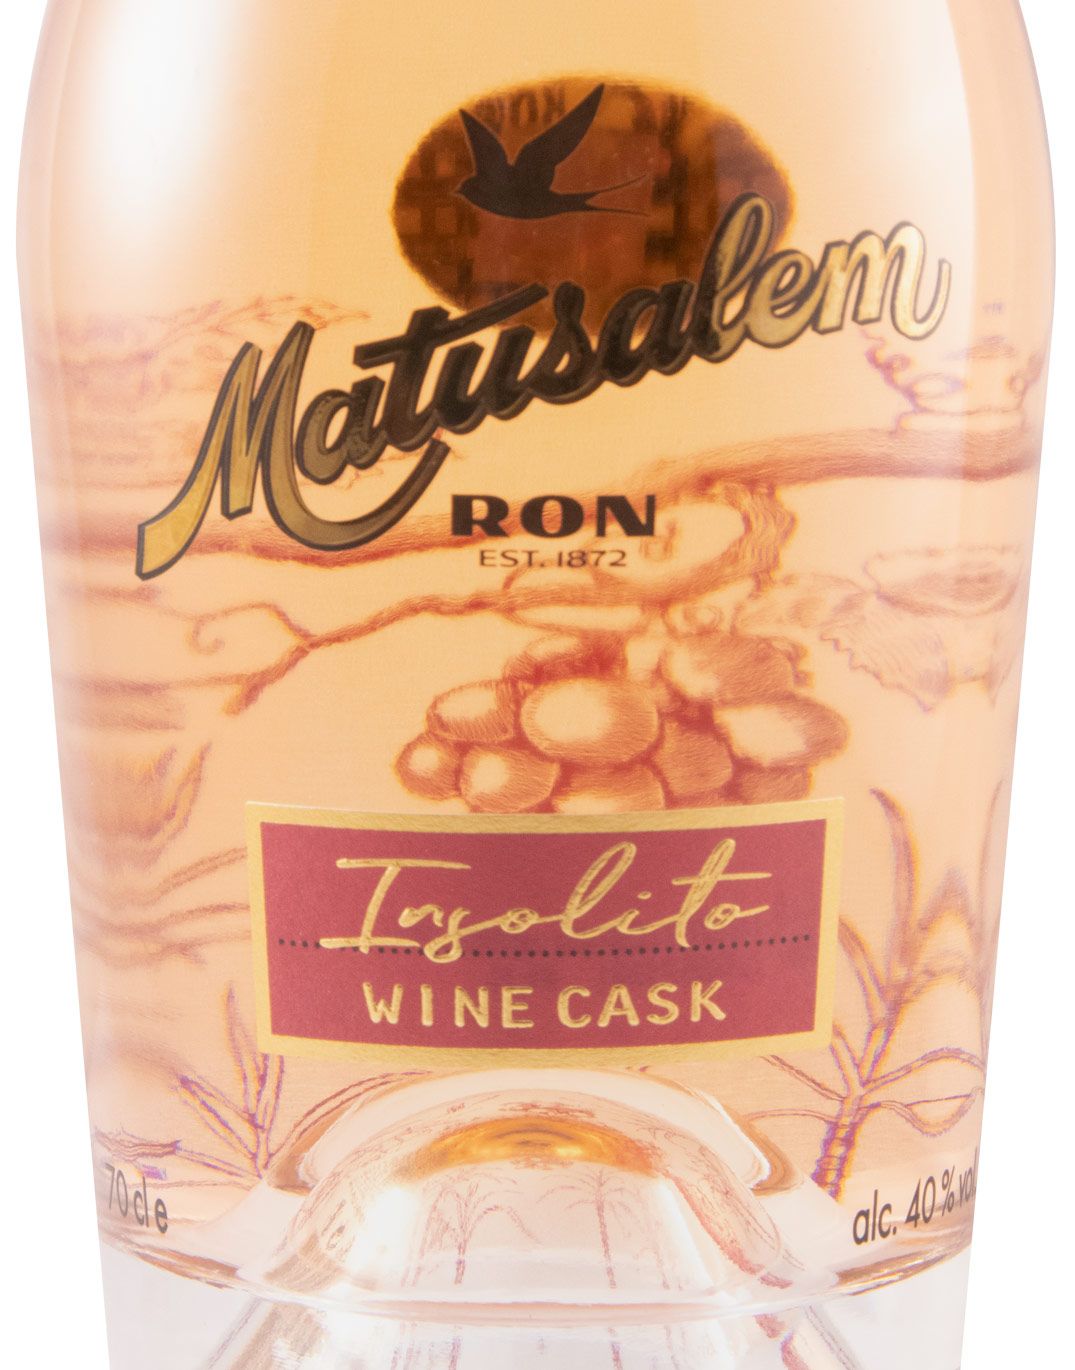 Rhum Matusalem Insolito Wine Cask